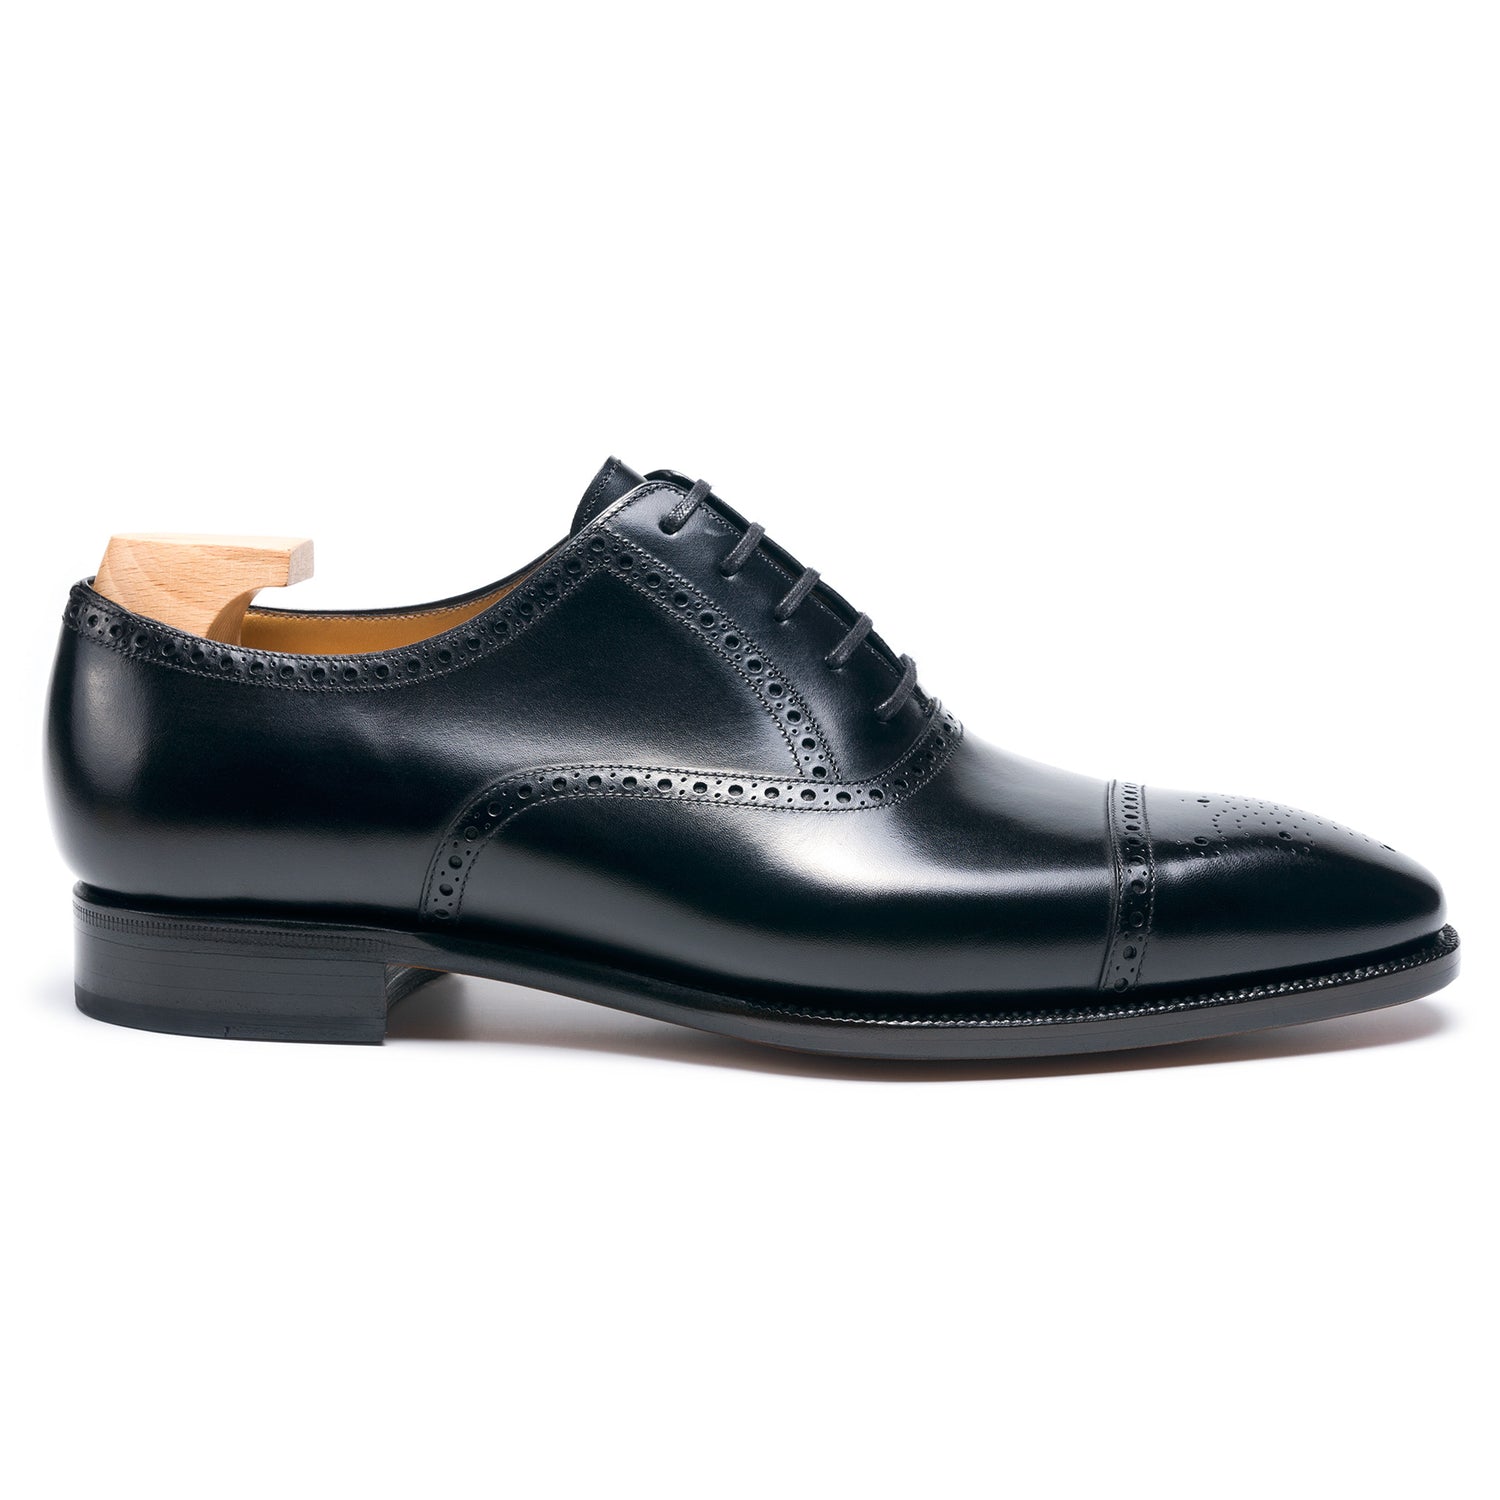 TLB Mallorca leather shoes 206 / VAN GOGH / BOXCALF BLACK